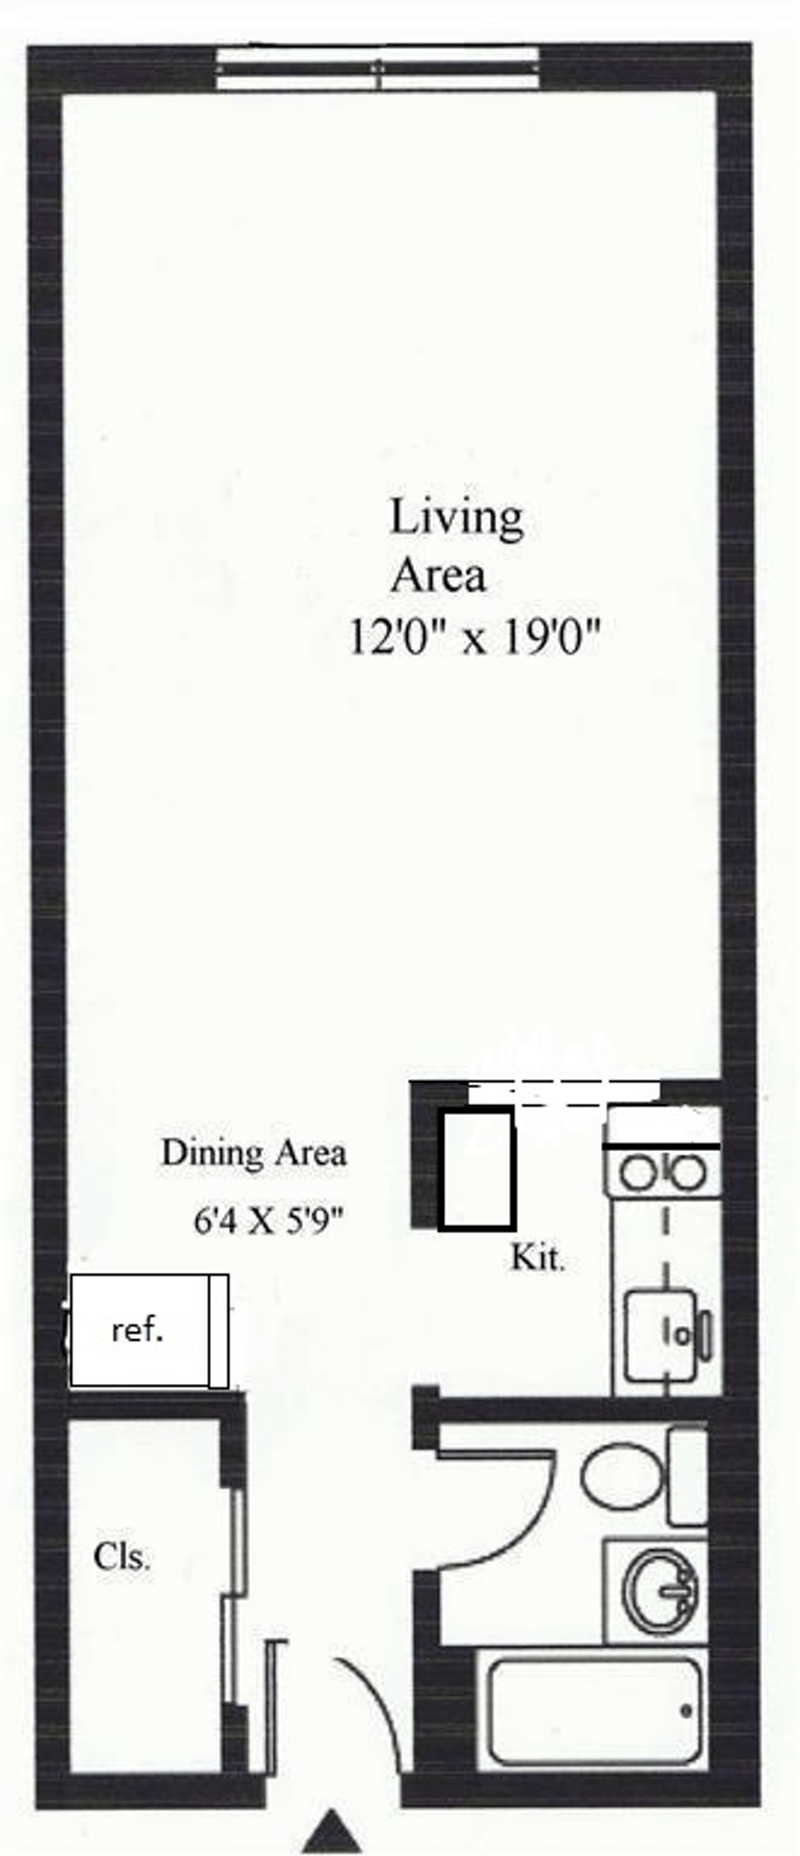 Floorplan for 229 East 29th Street, 3A